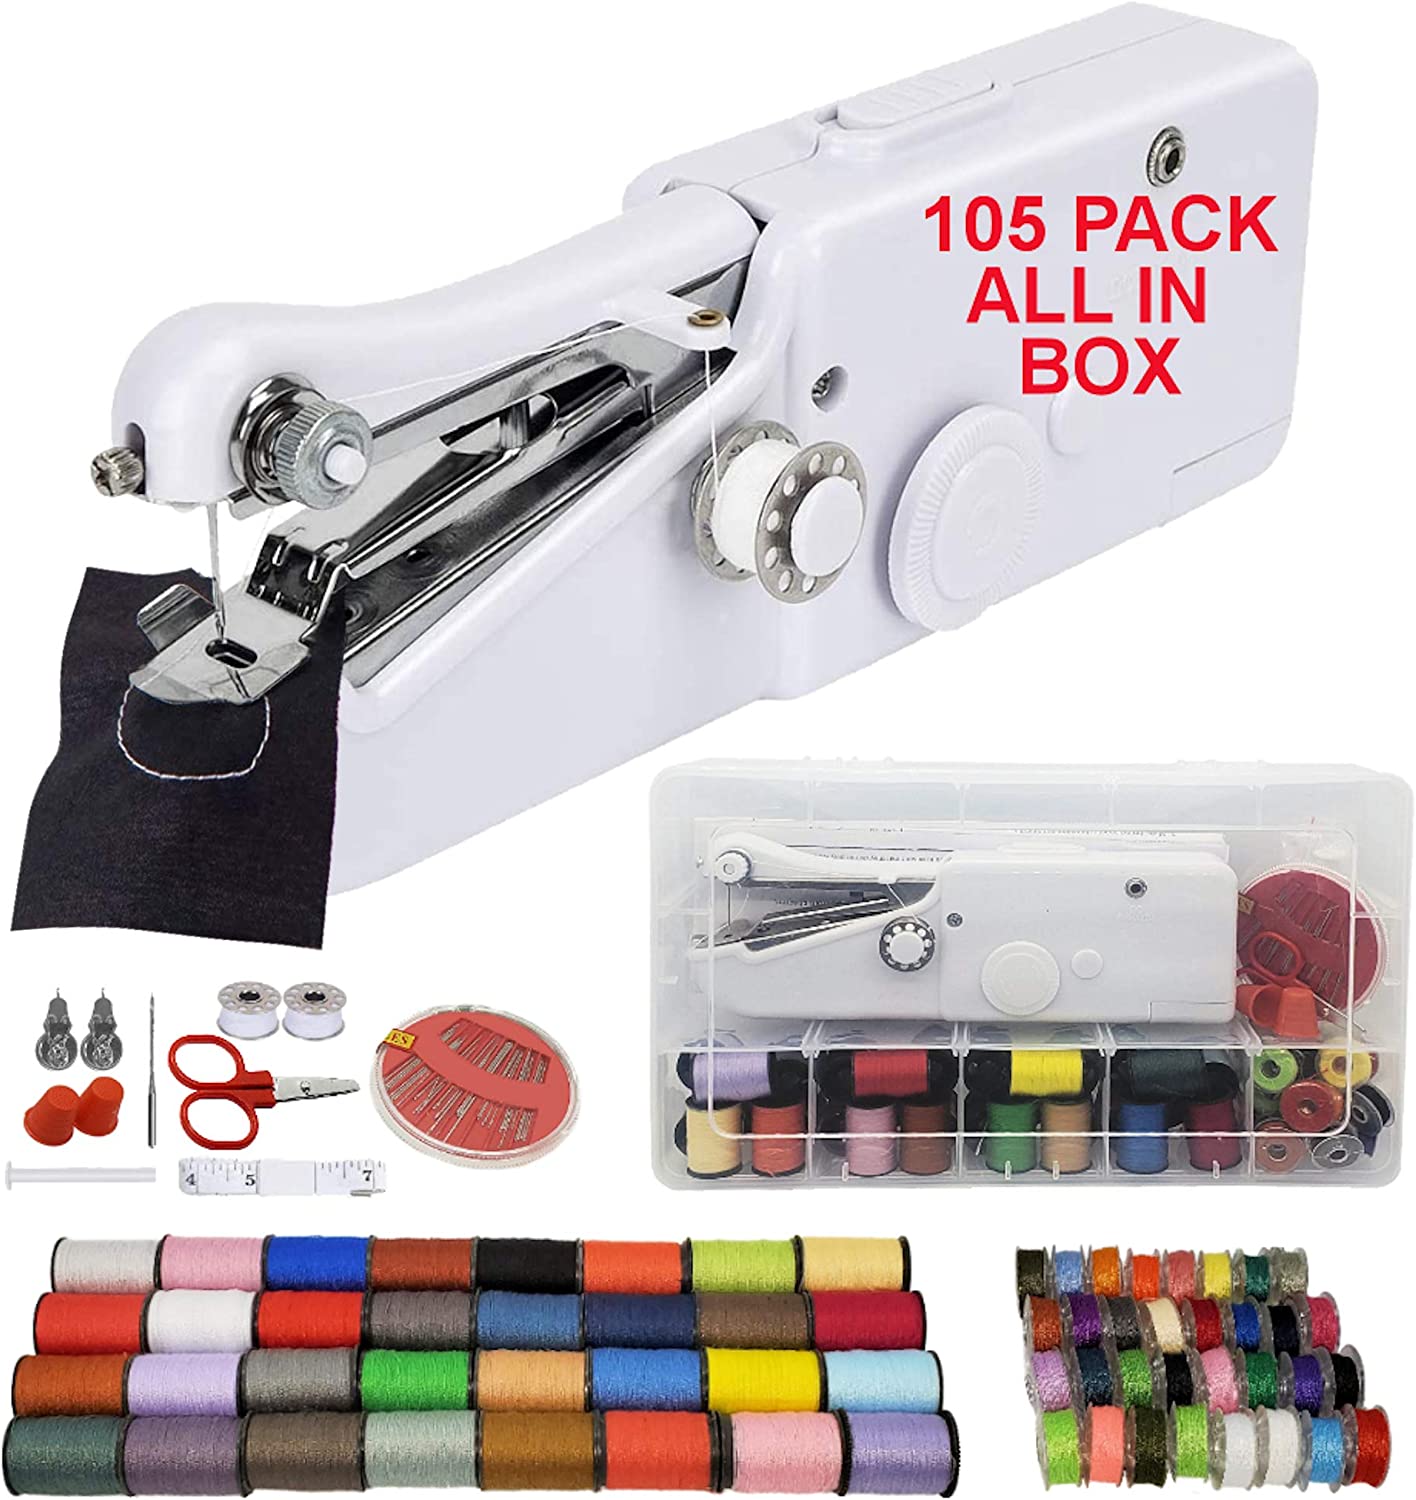 105 PCS Handheld Sewing Machine + Color Thread Kit + Case, Hand Sewing Machine, Mini Sewing Machine, Kit, Portable Travel Stitch Quick Handy